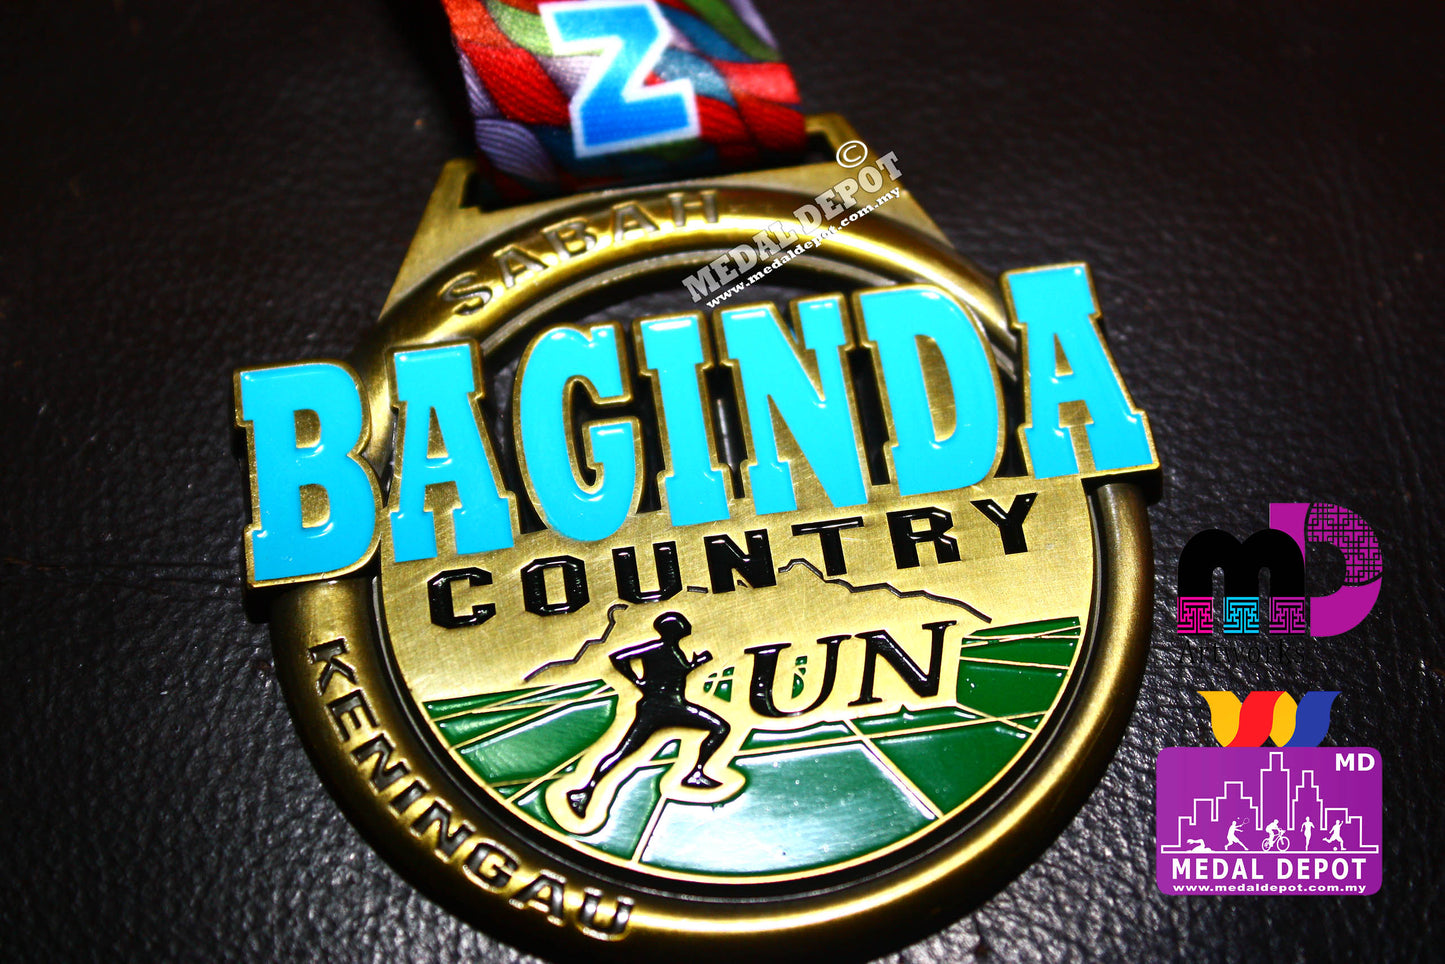 Baginda Country Run Keningau 2015